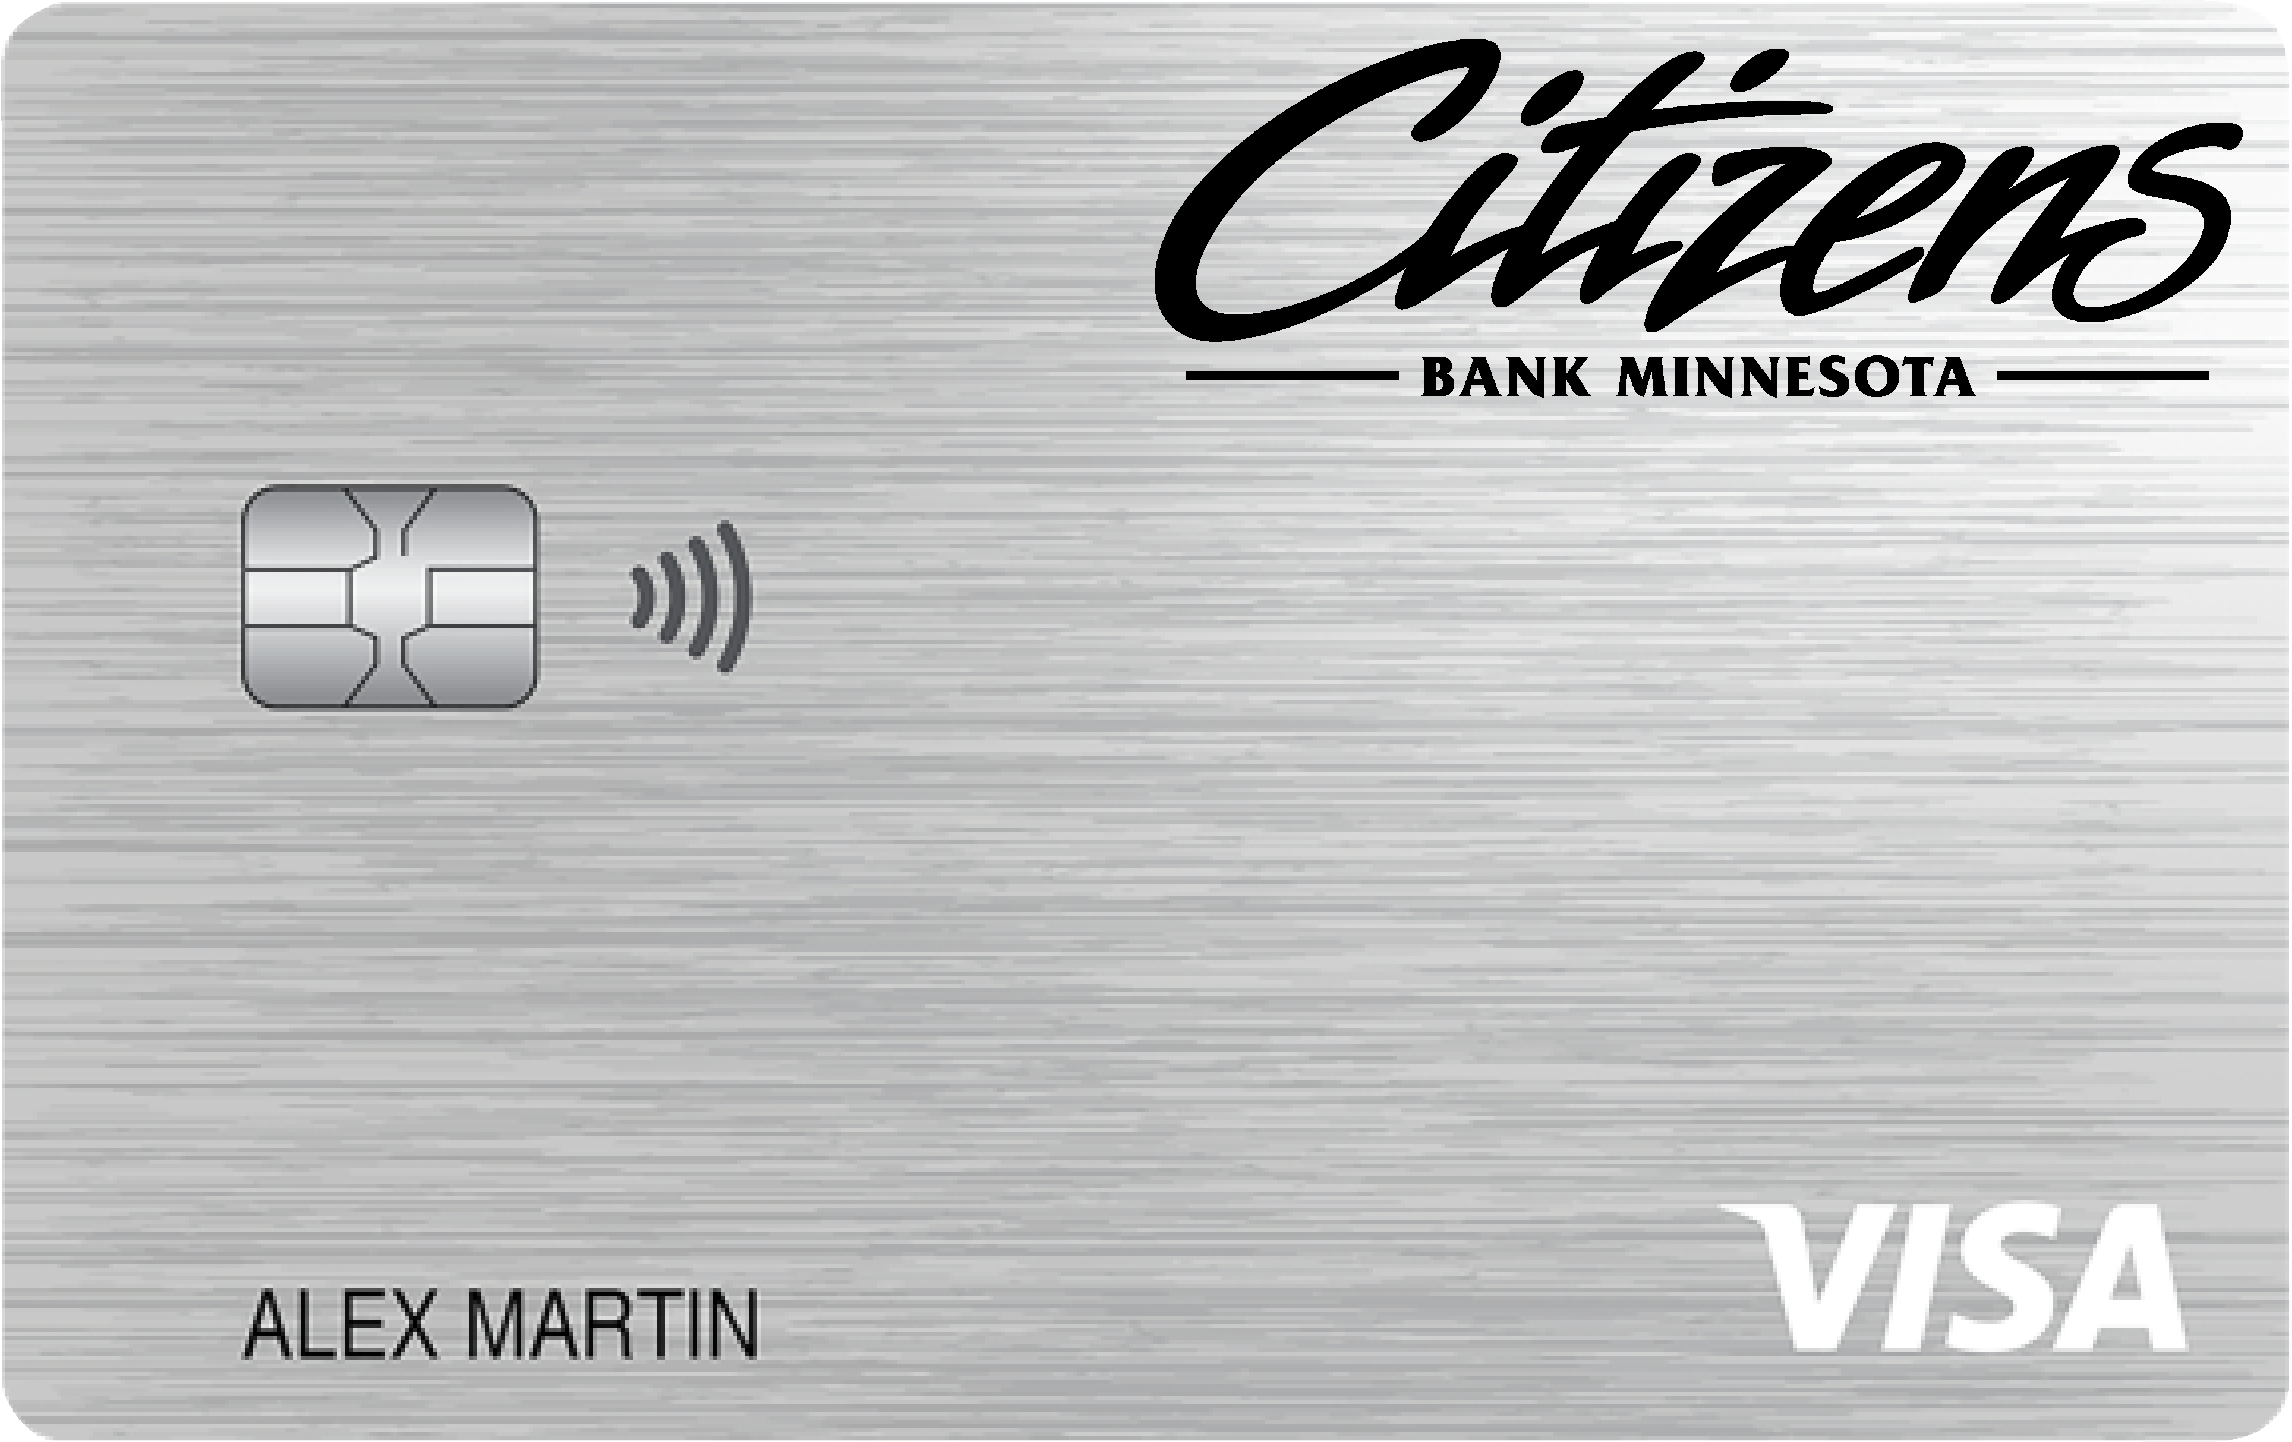 Citizens Bank Minnesota Secured Card